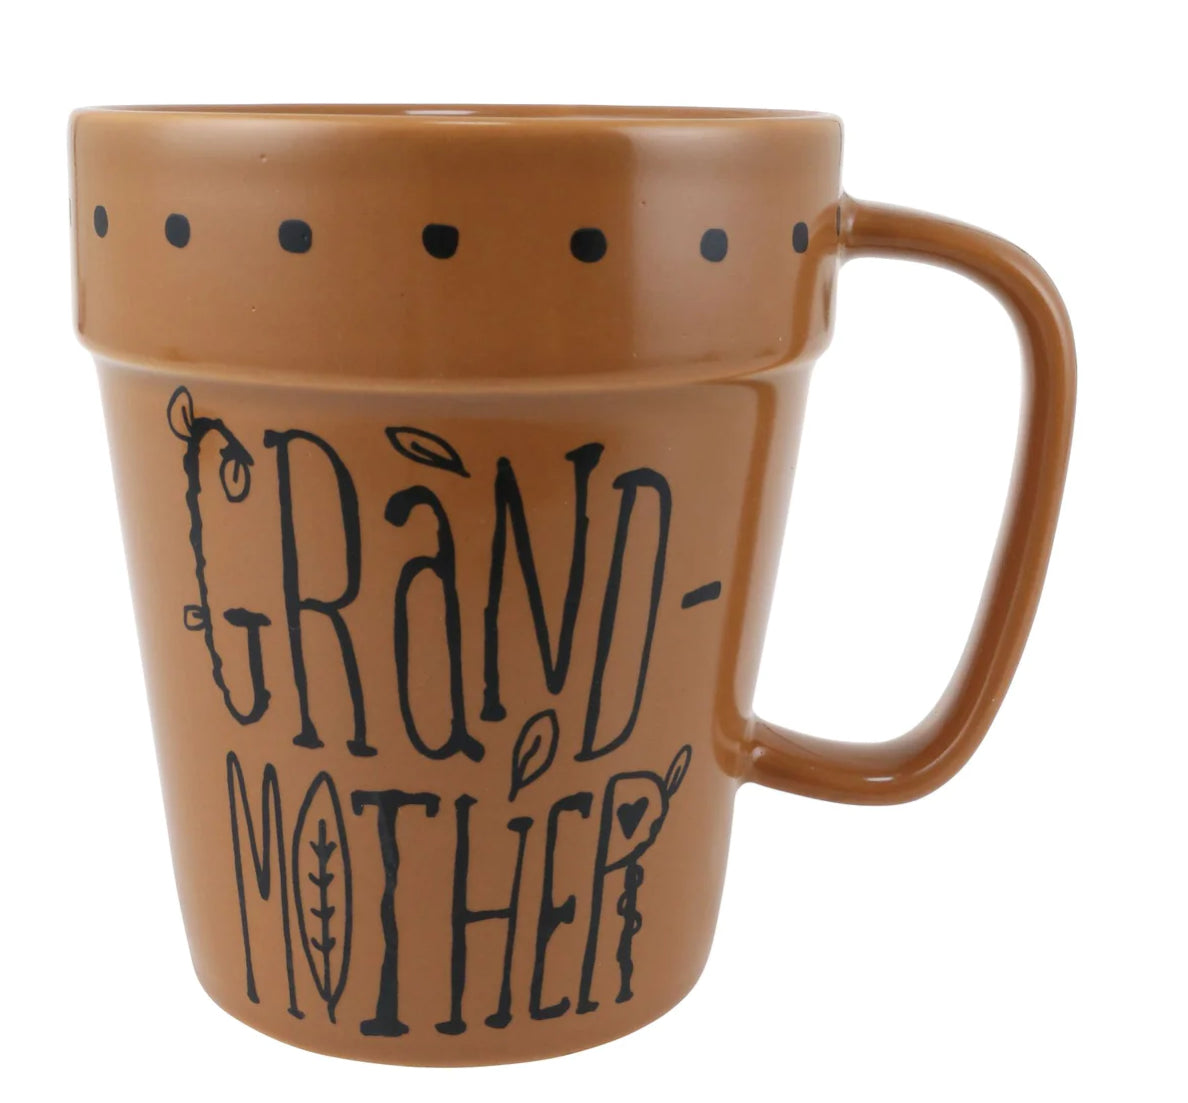 Grandmother Planter Mug